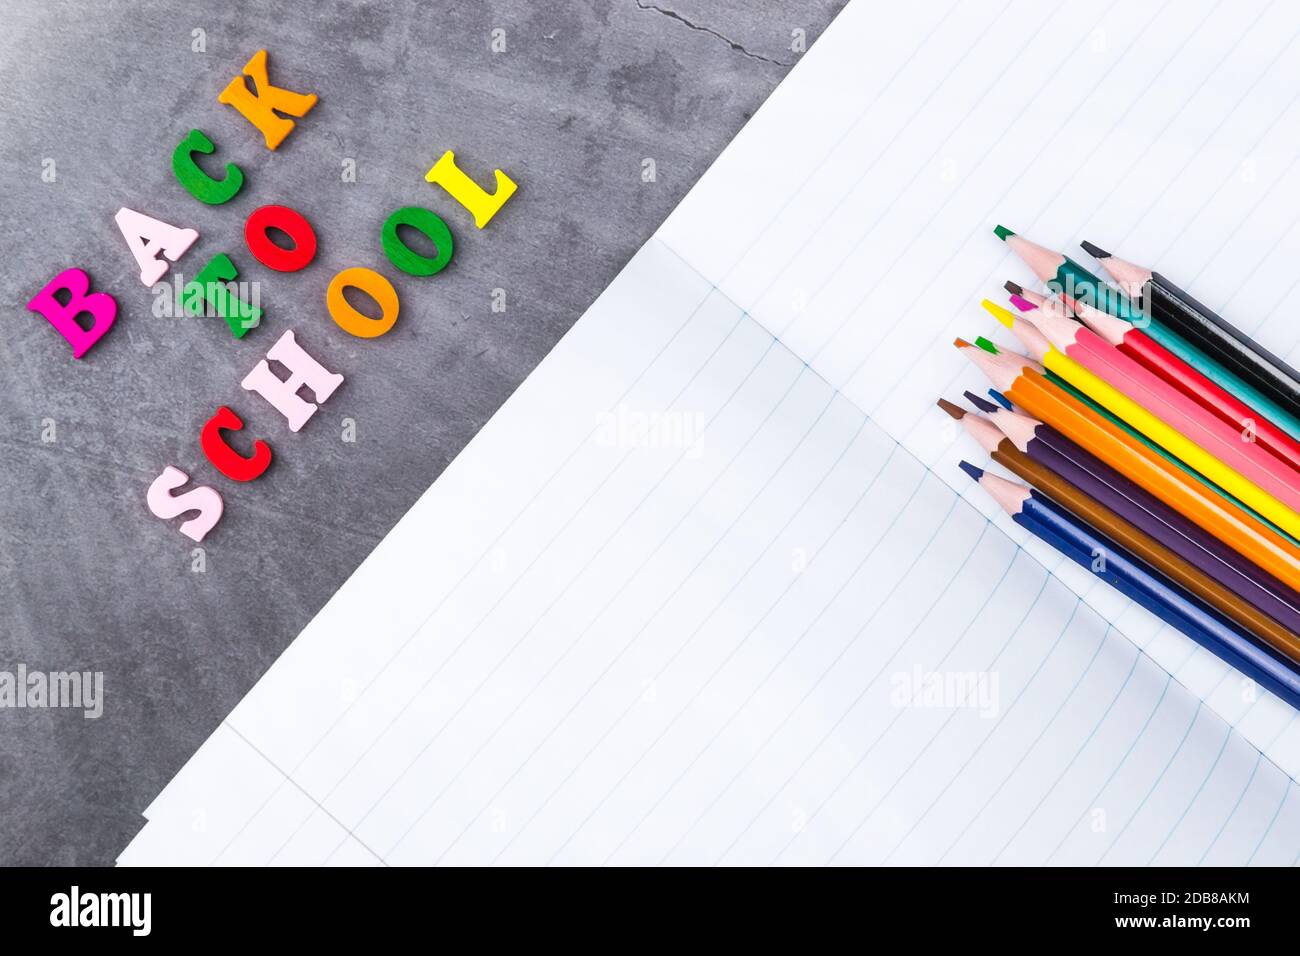 School supplies collage Stock Photo - Alamy